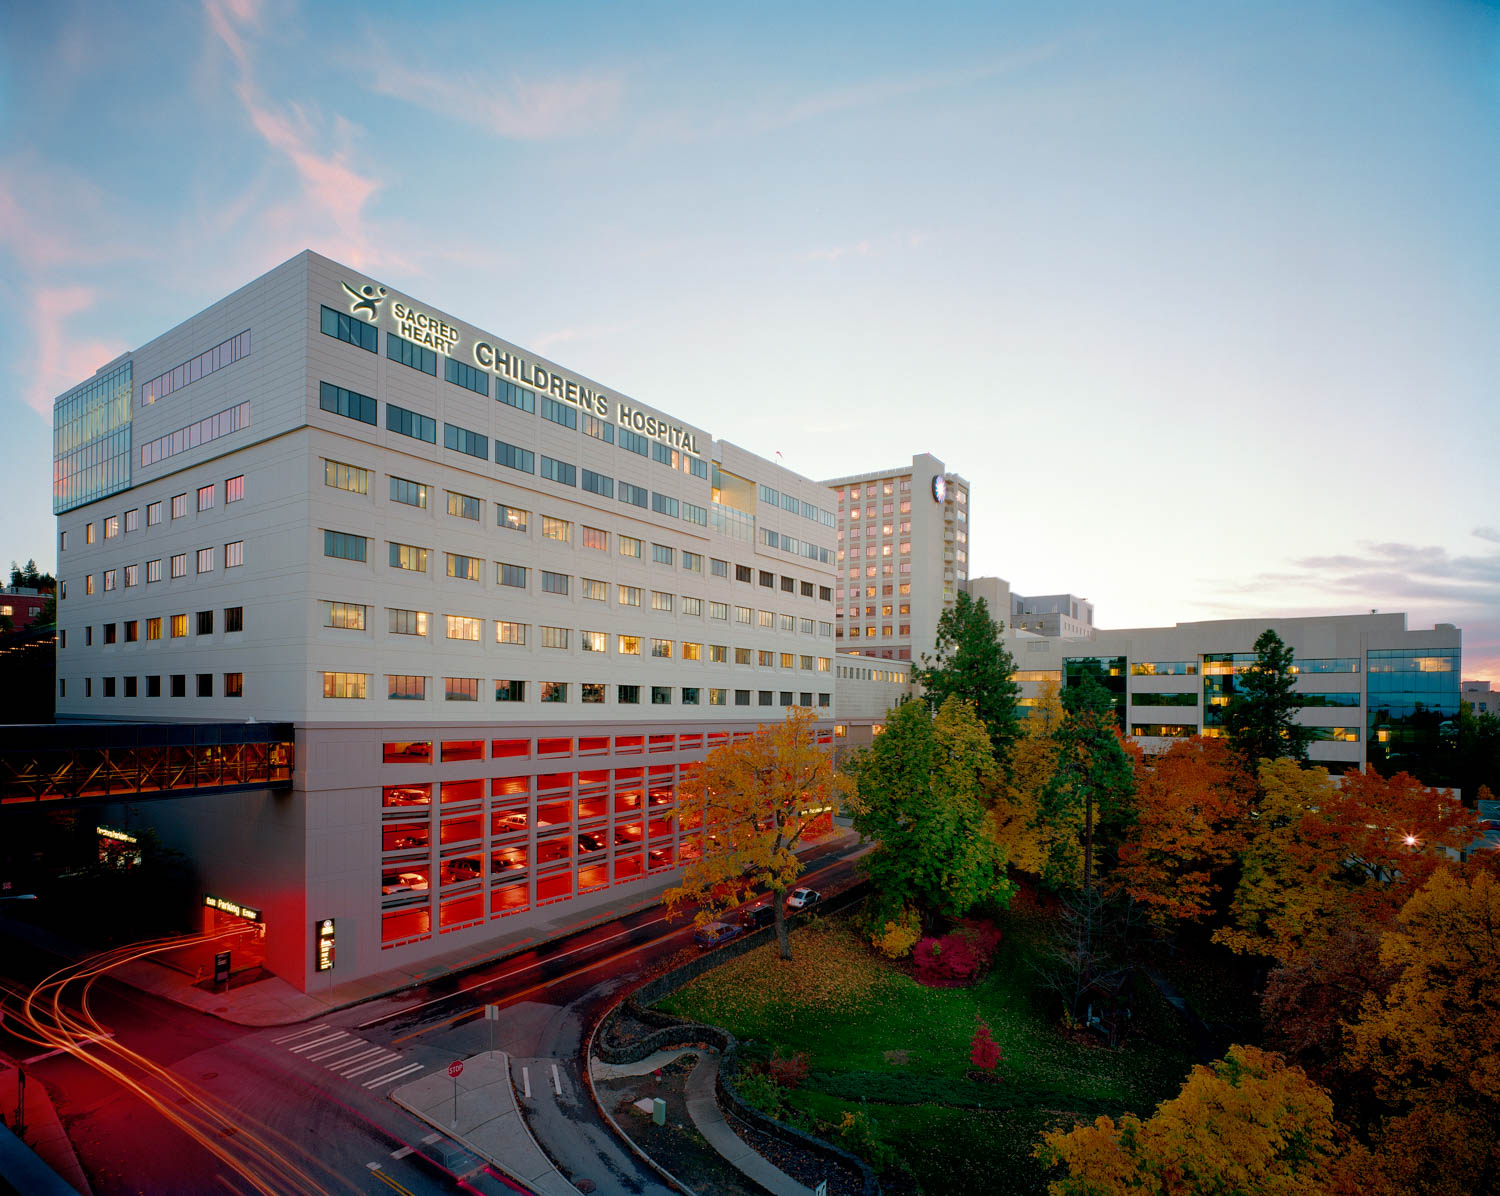 Providence Sacred Heart Childrens Hospital Campus in Spokane The